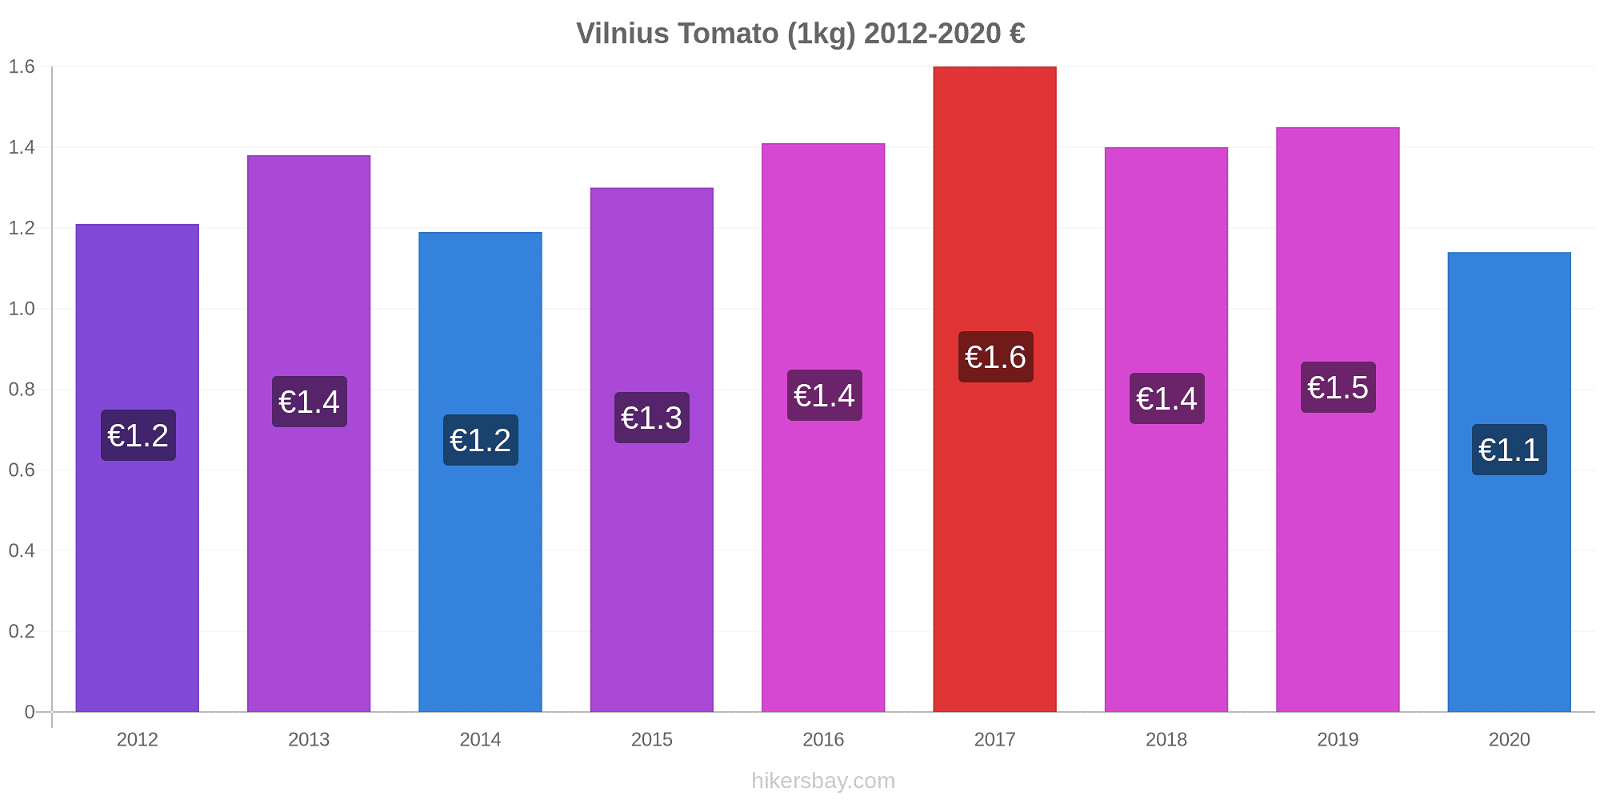 Vilnius price changes Tomato (1kg) hikersbay.com